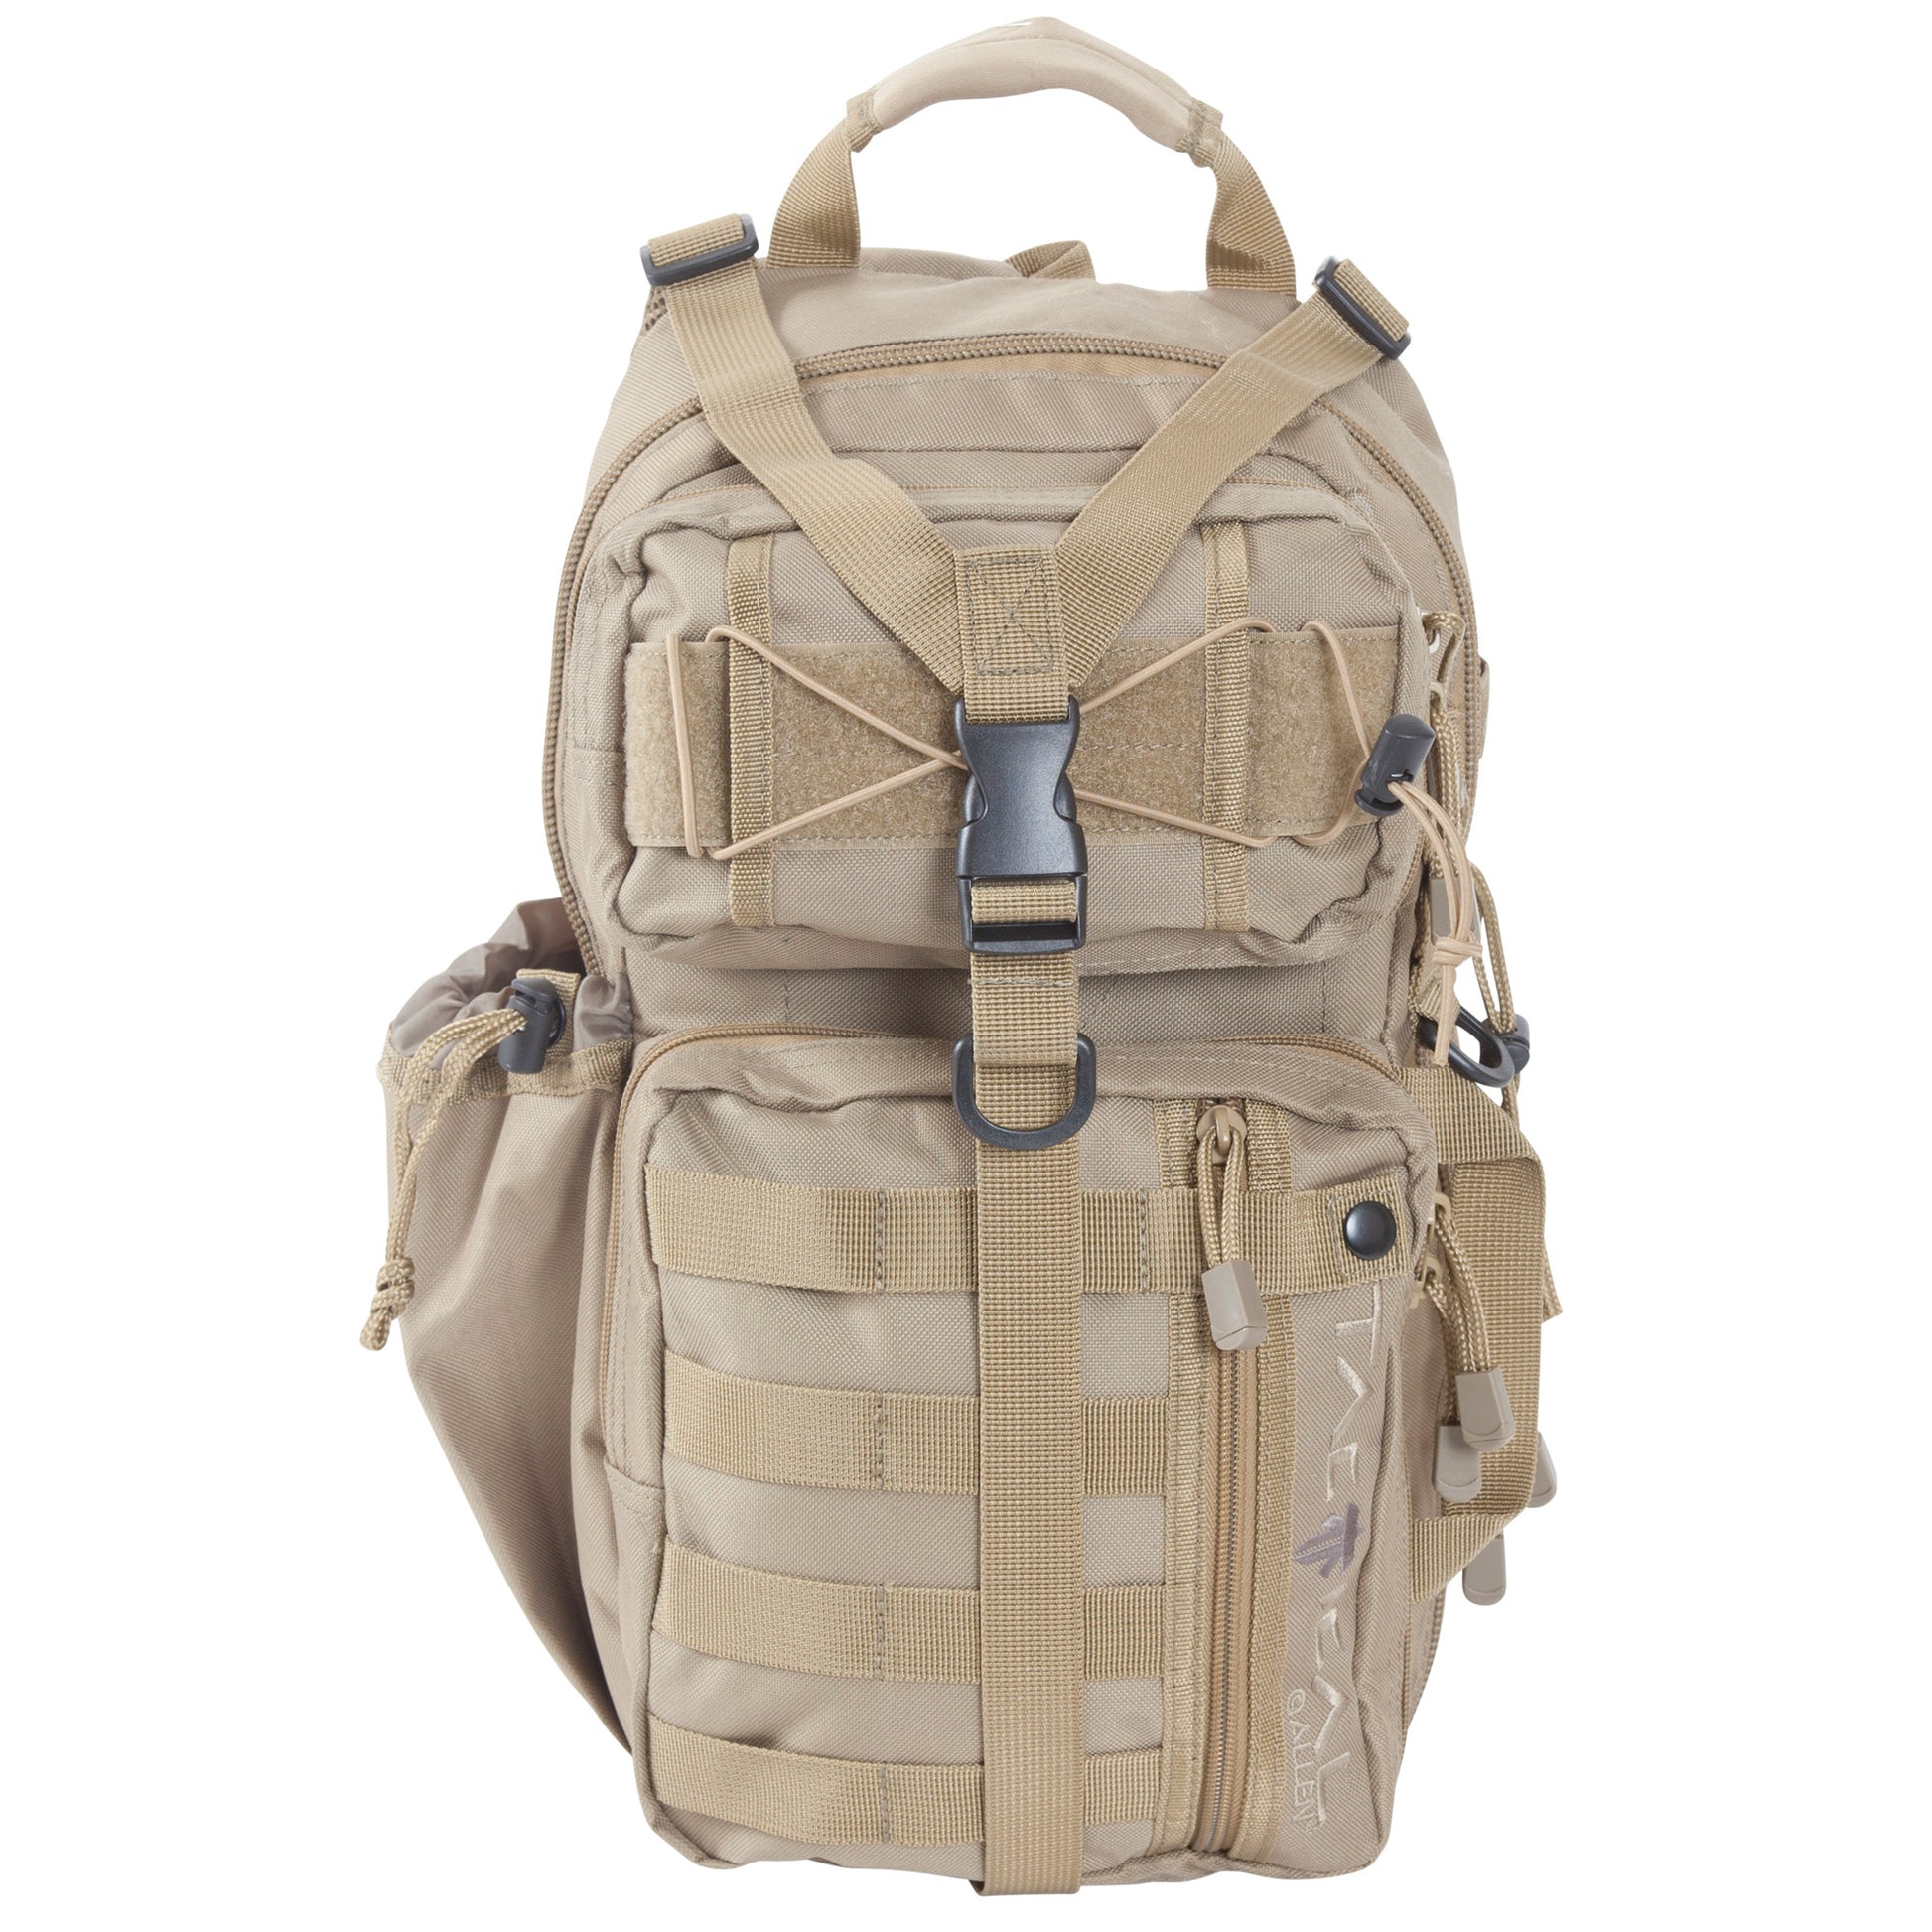 Allen Lite Force Tactical Sling Pack Tan Endura Fabric 18x9x7 1200 Cu In 10855 - California Shooting Supplies